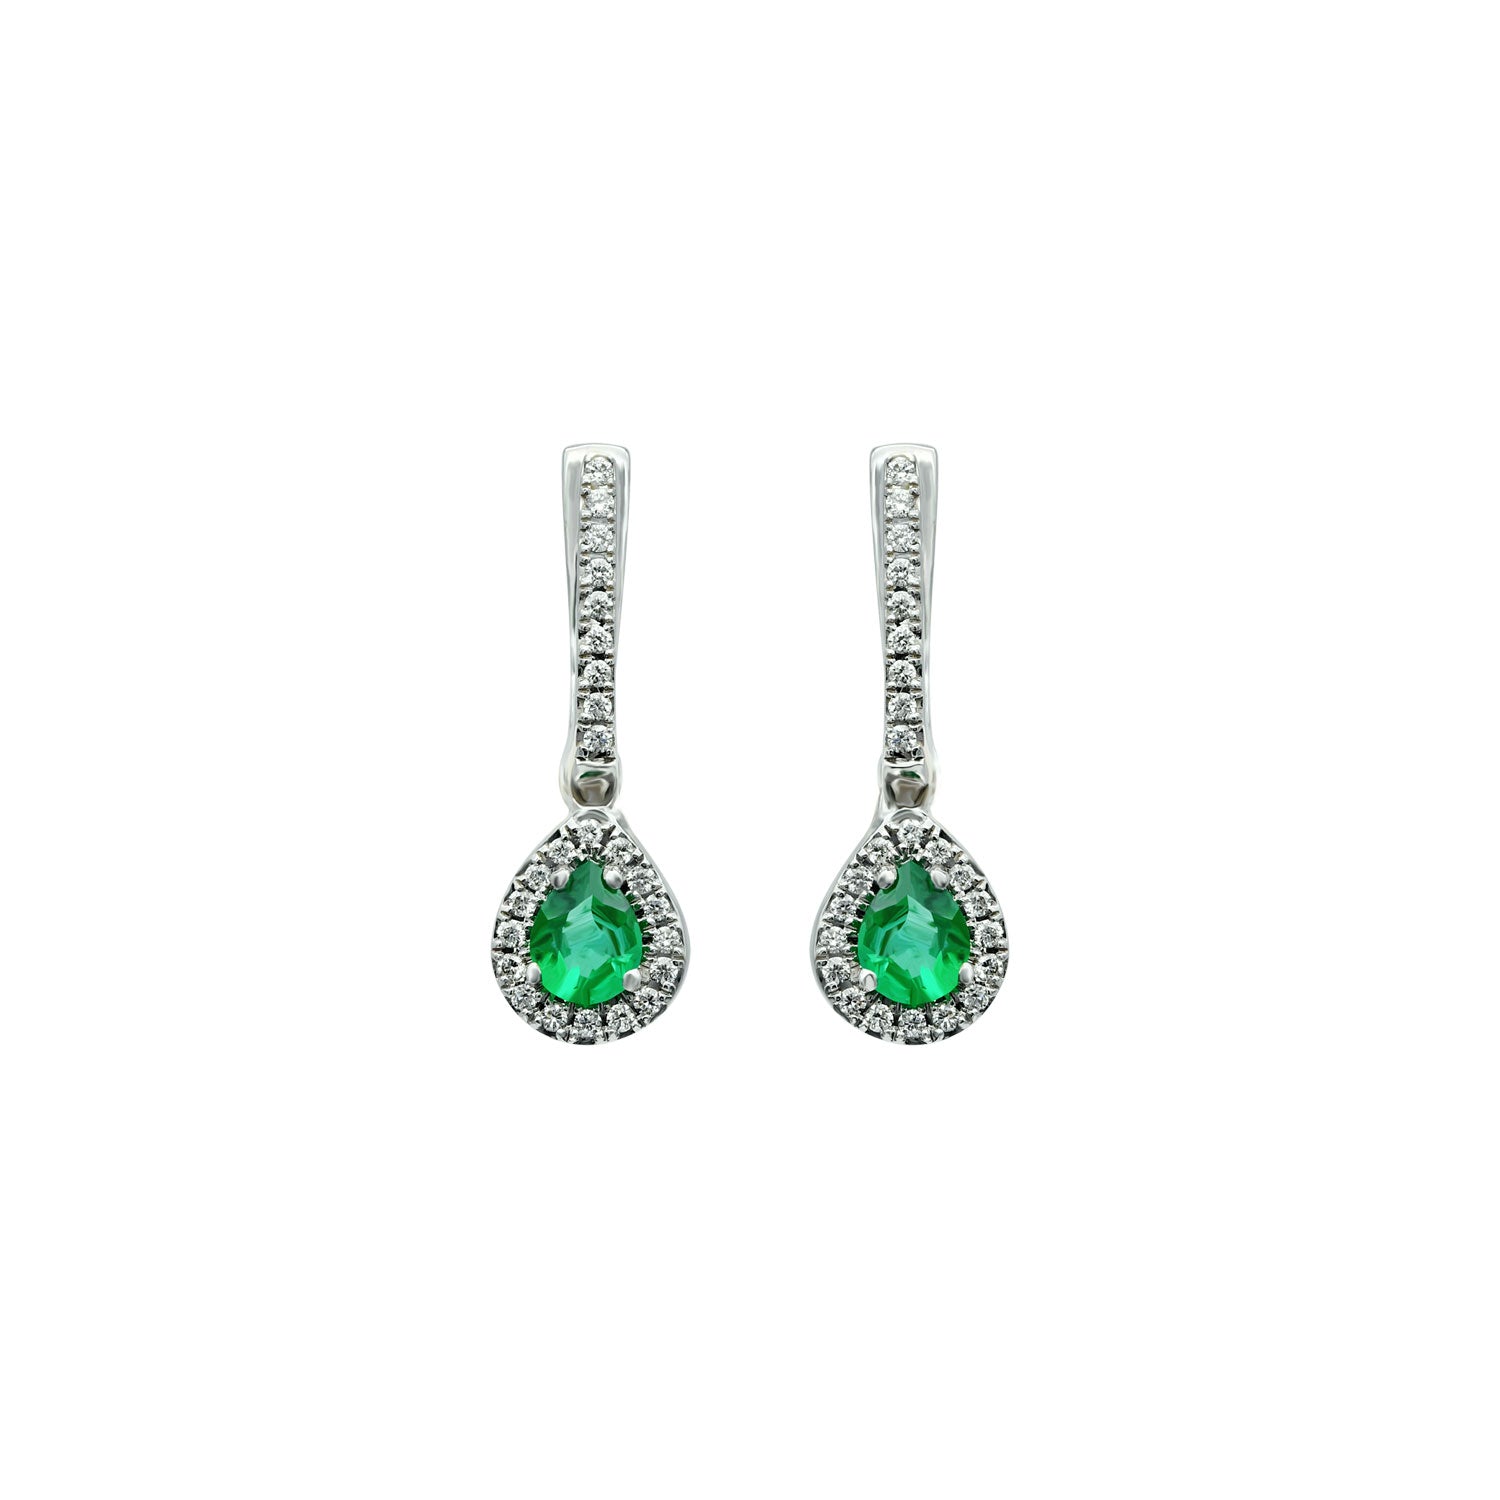 Pear shaped Emerald earrings 